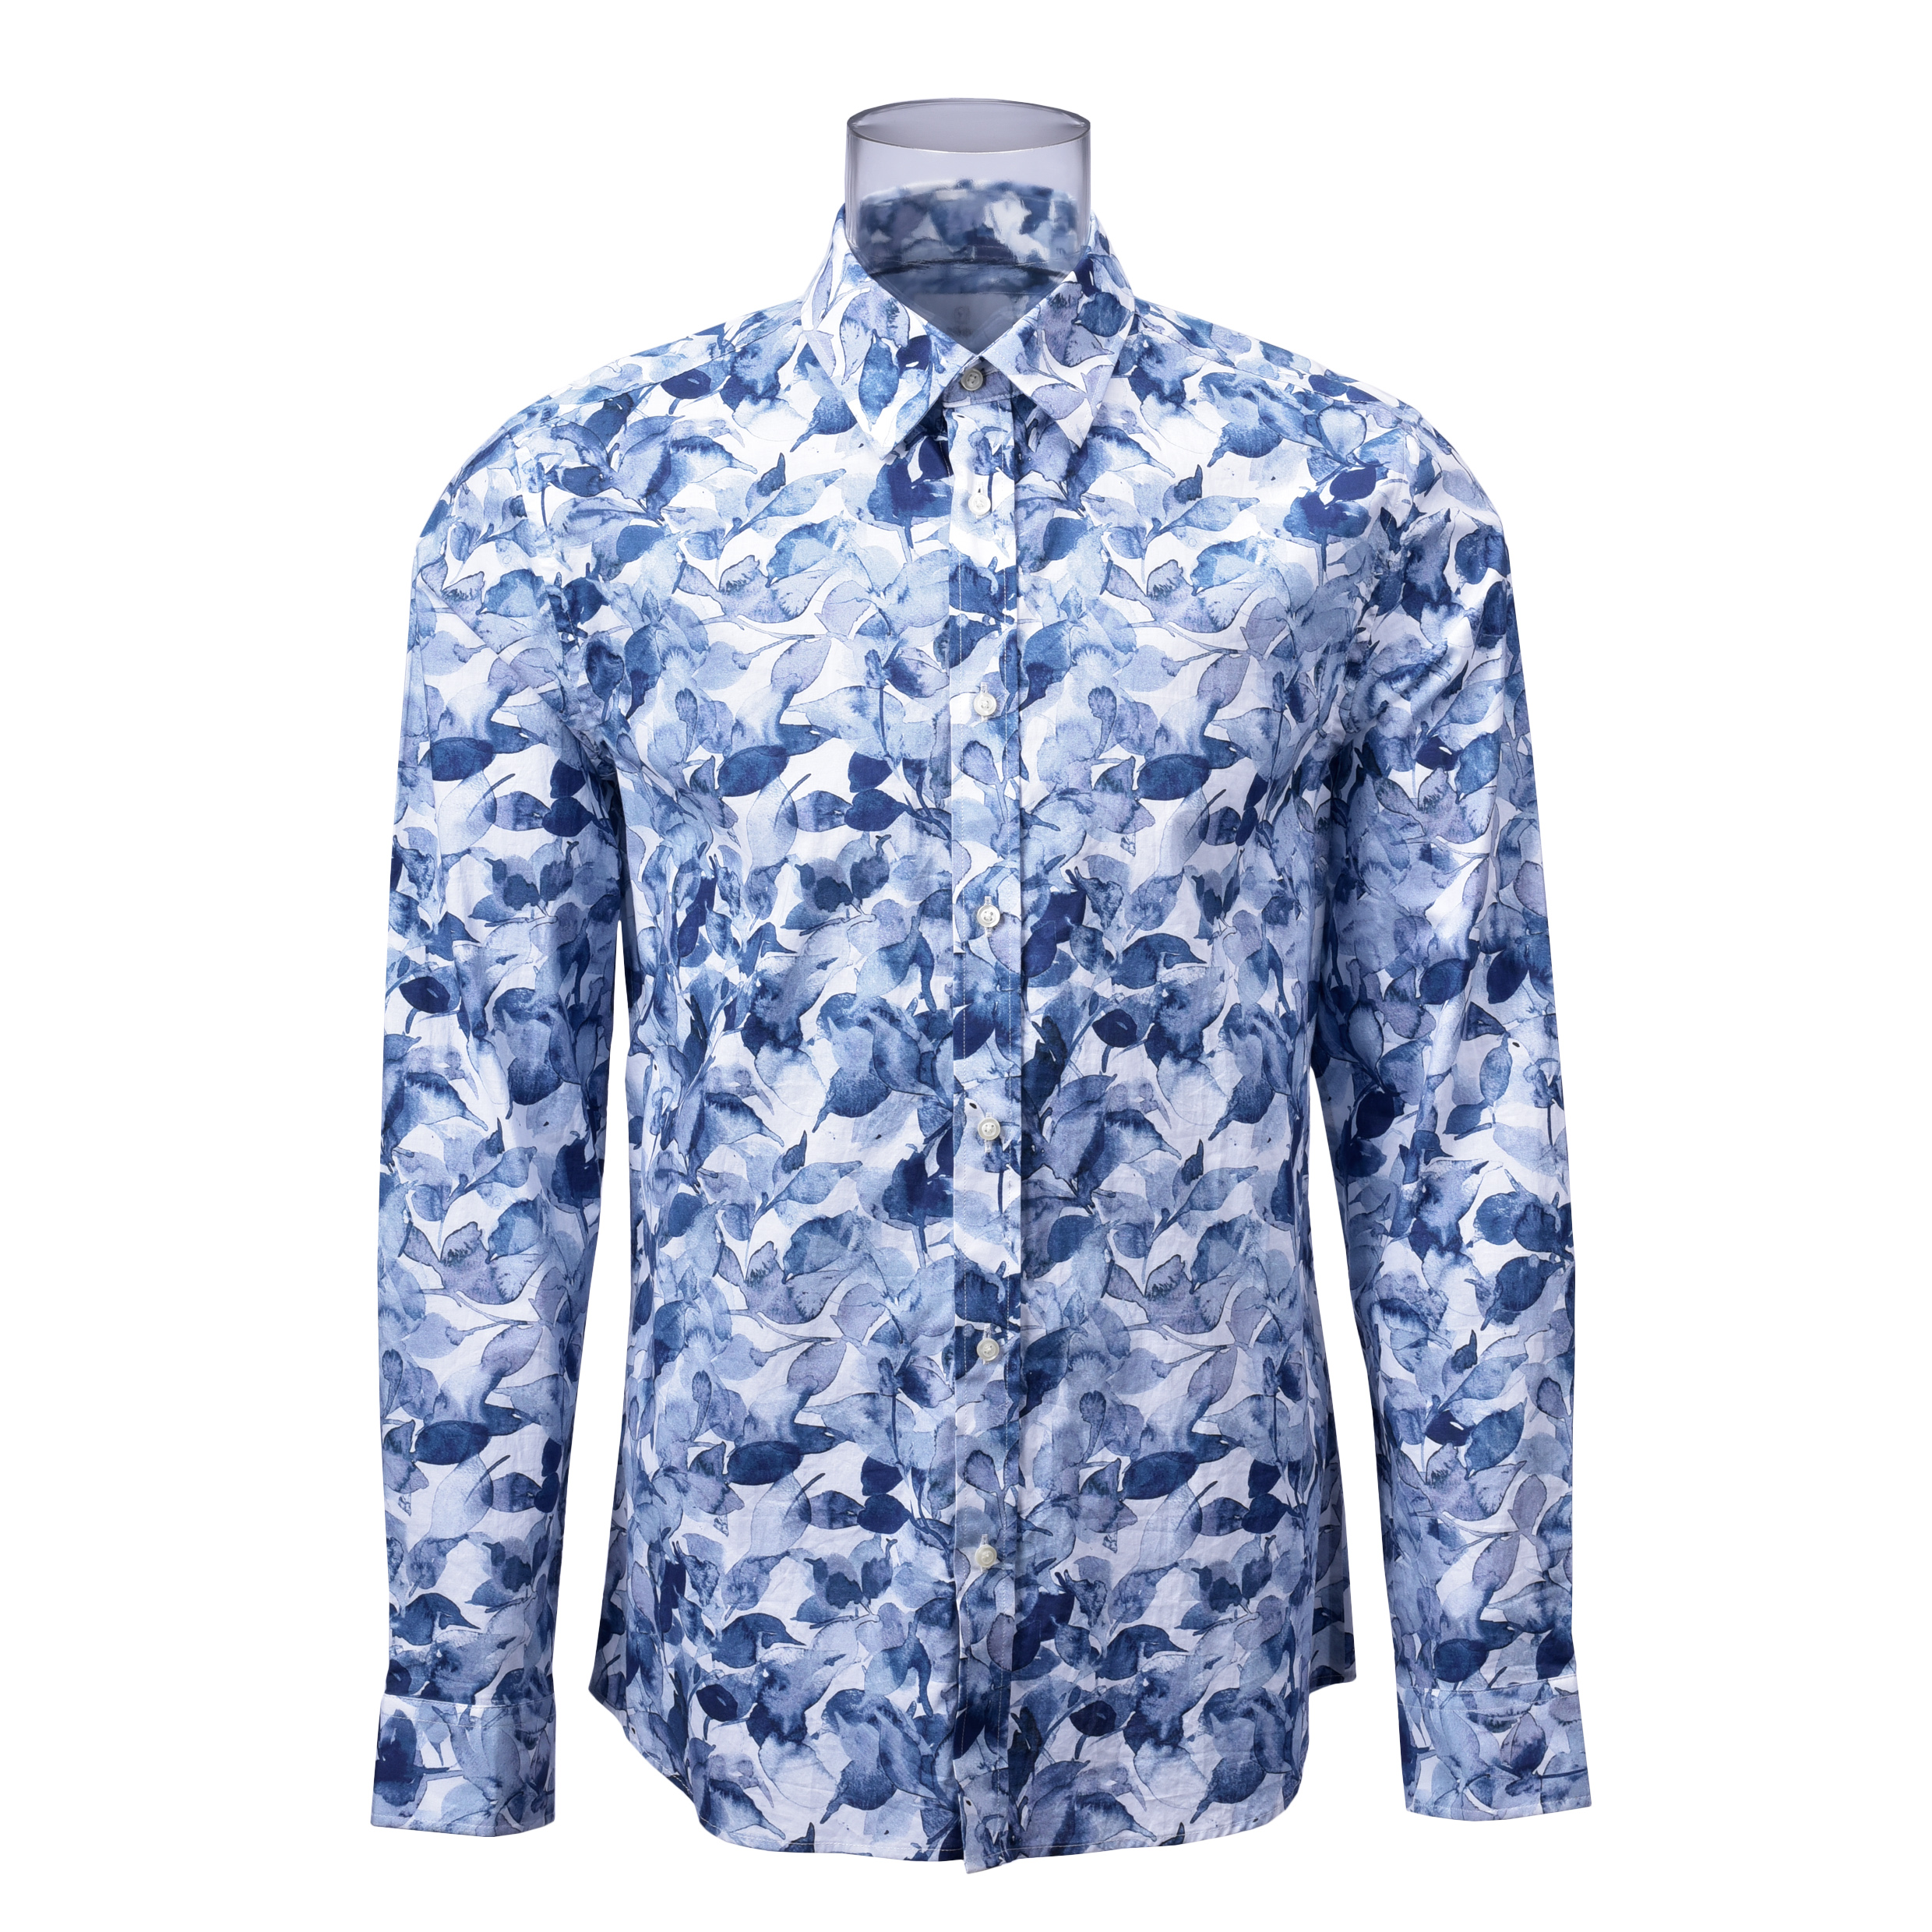 Nice Quality Men’s Print Shirt 100% Cotton Long Sleeve Blue Floral ...